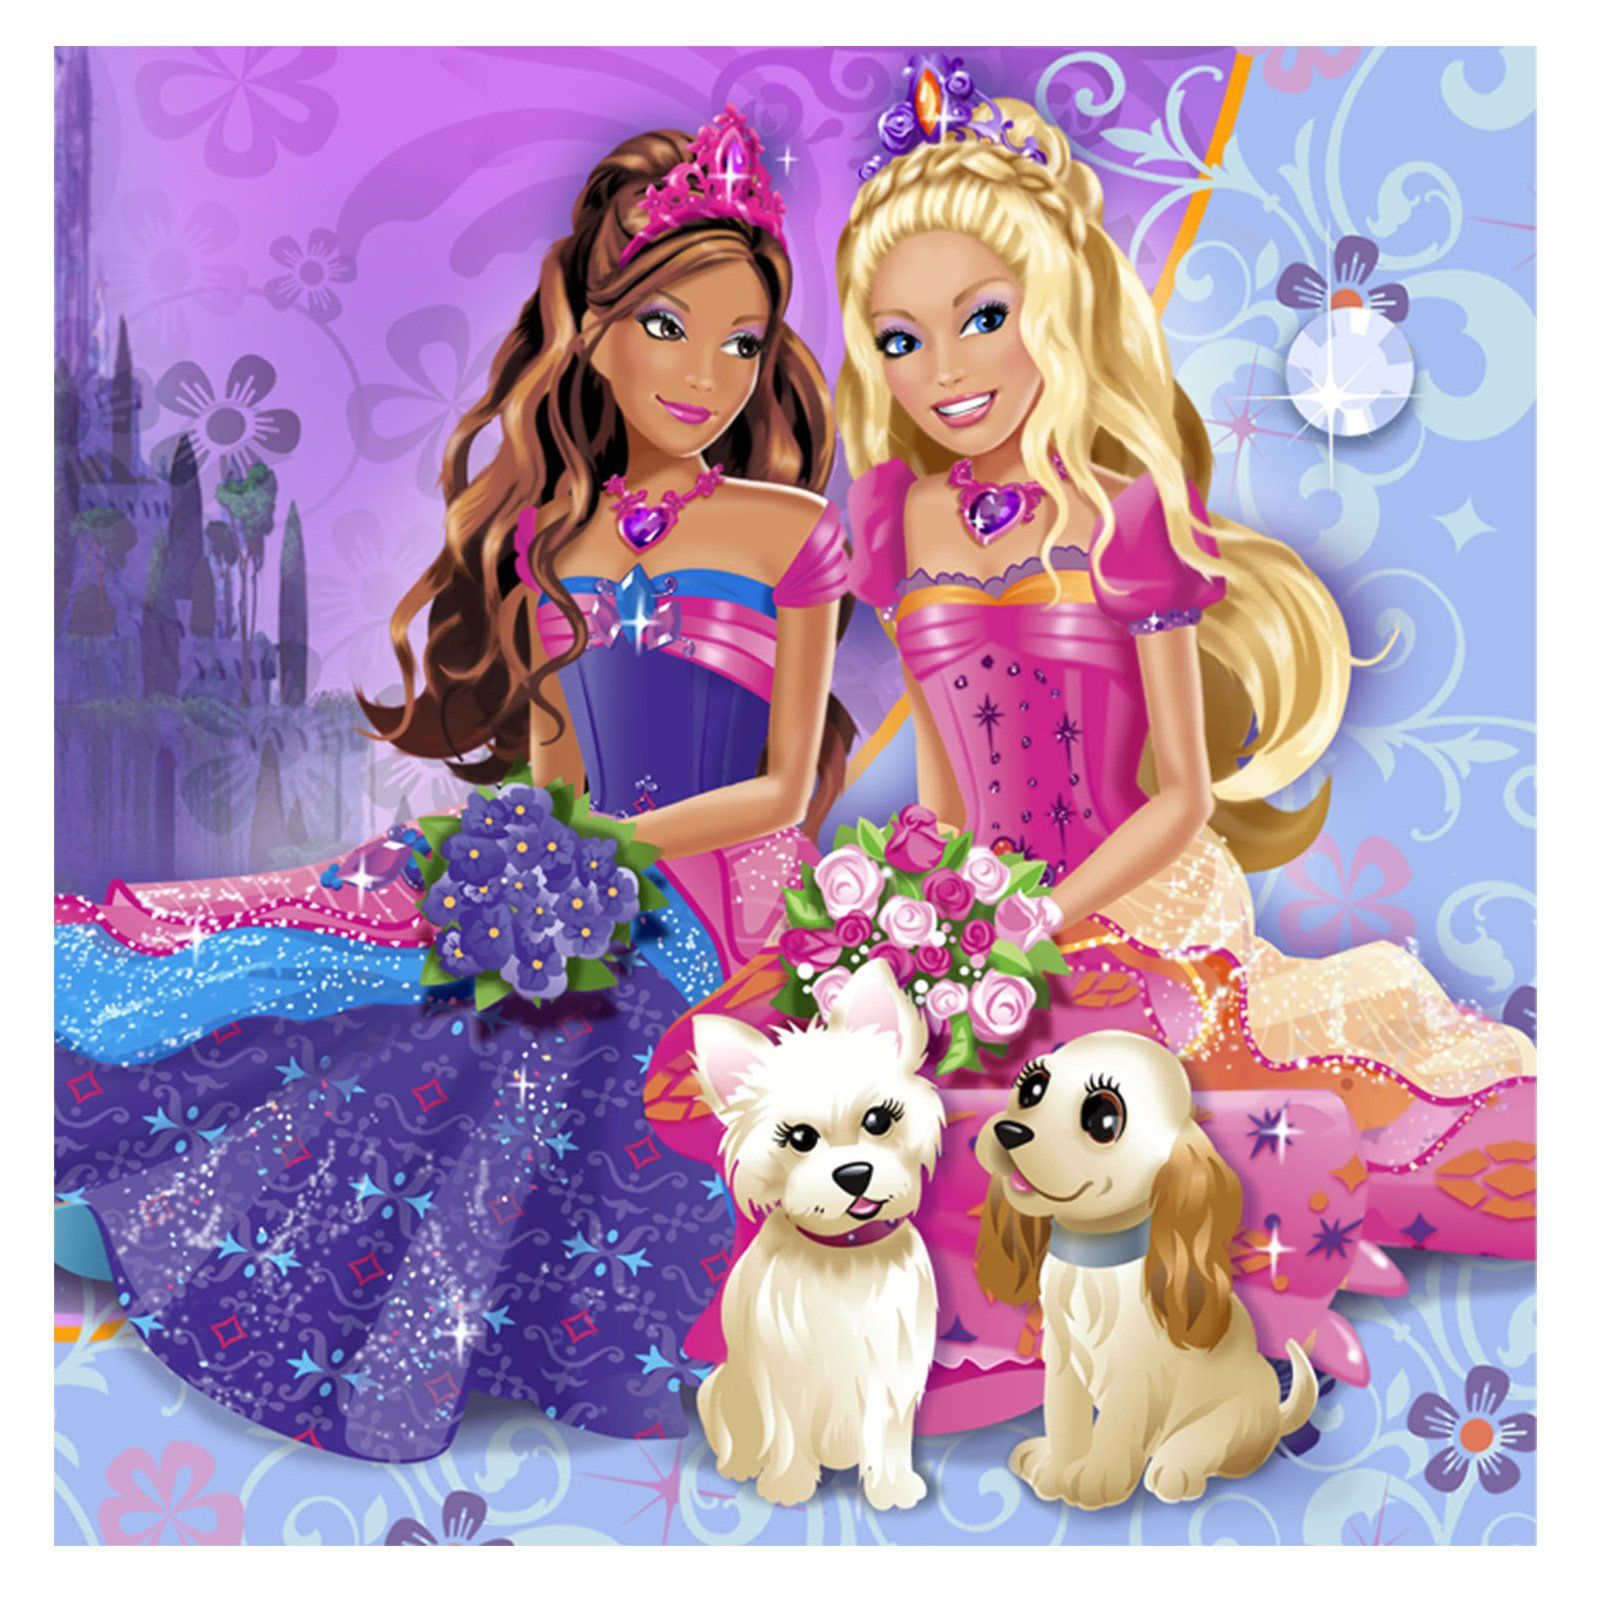 Barbie Doll Picture Cartoon - 1600x1600 Wallpaper 